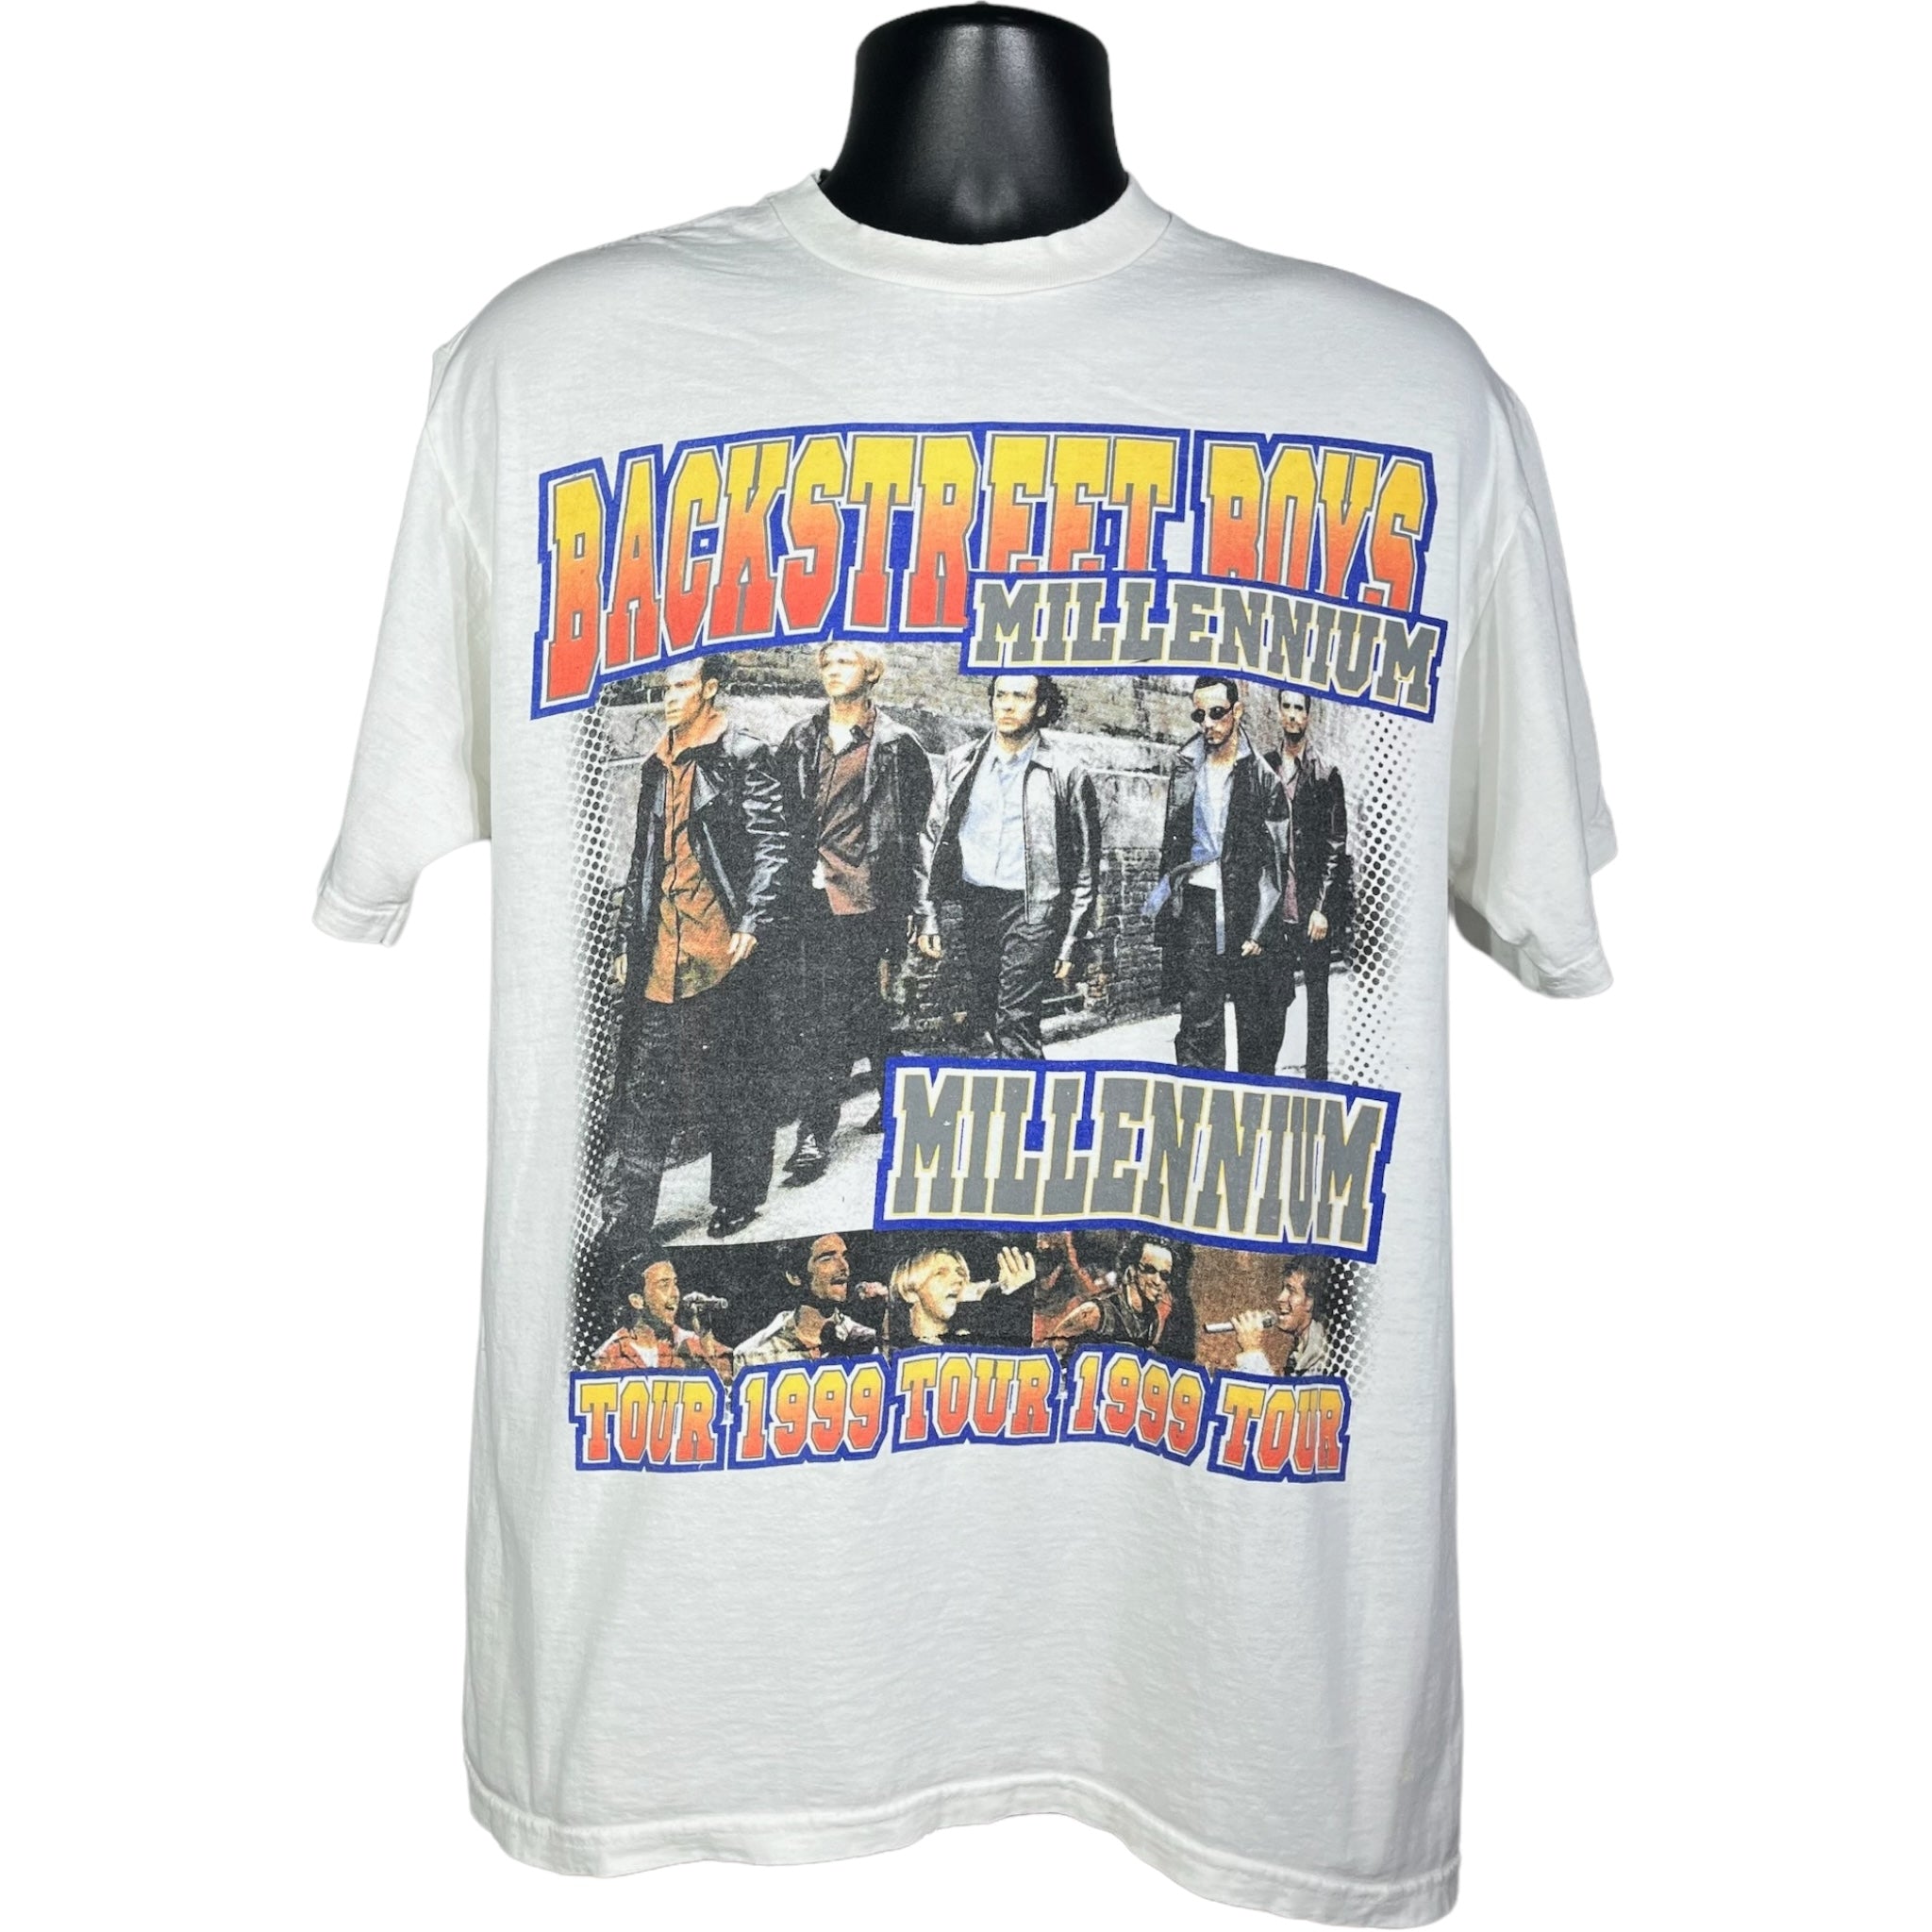 Vintage Backstreet Boys Millennium Tour Tee 1999